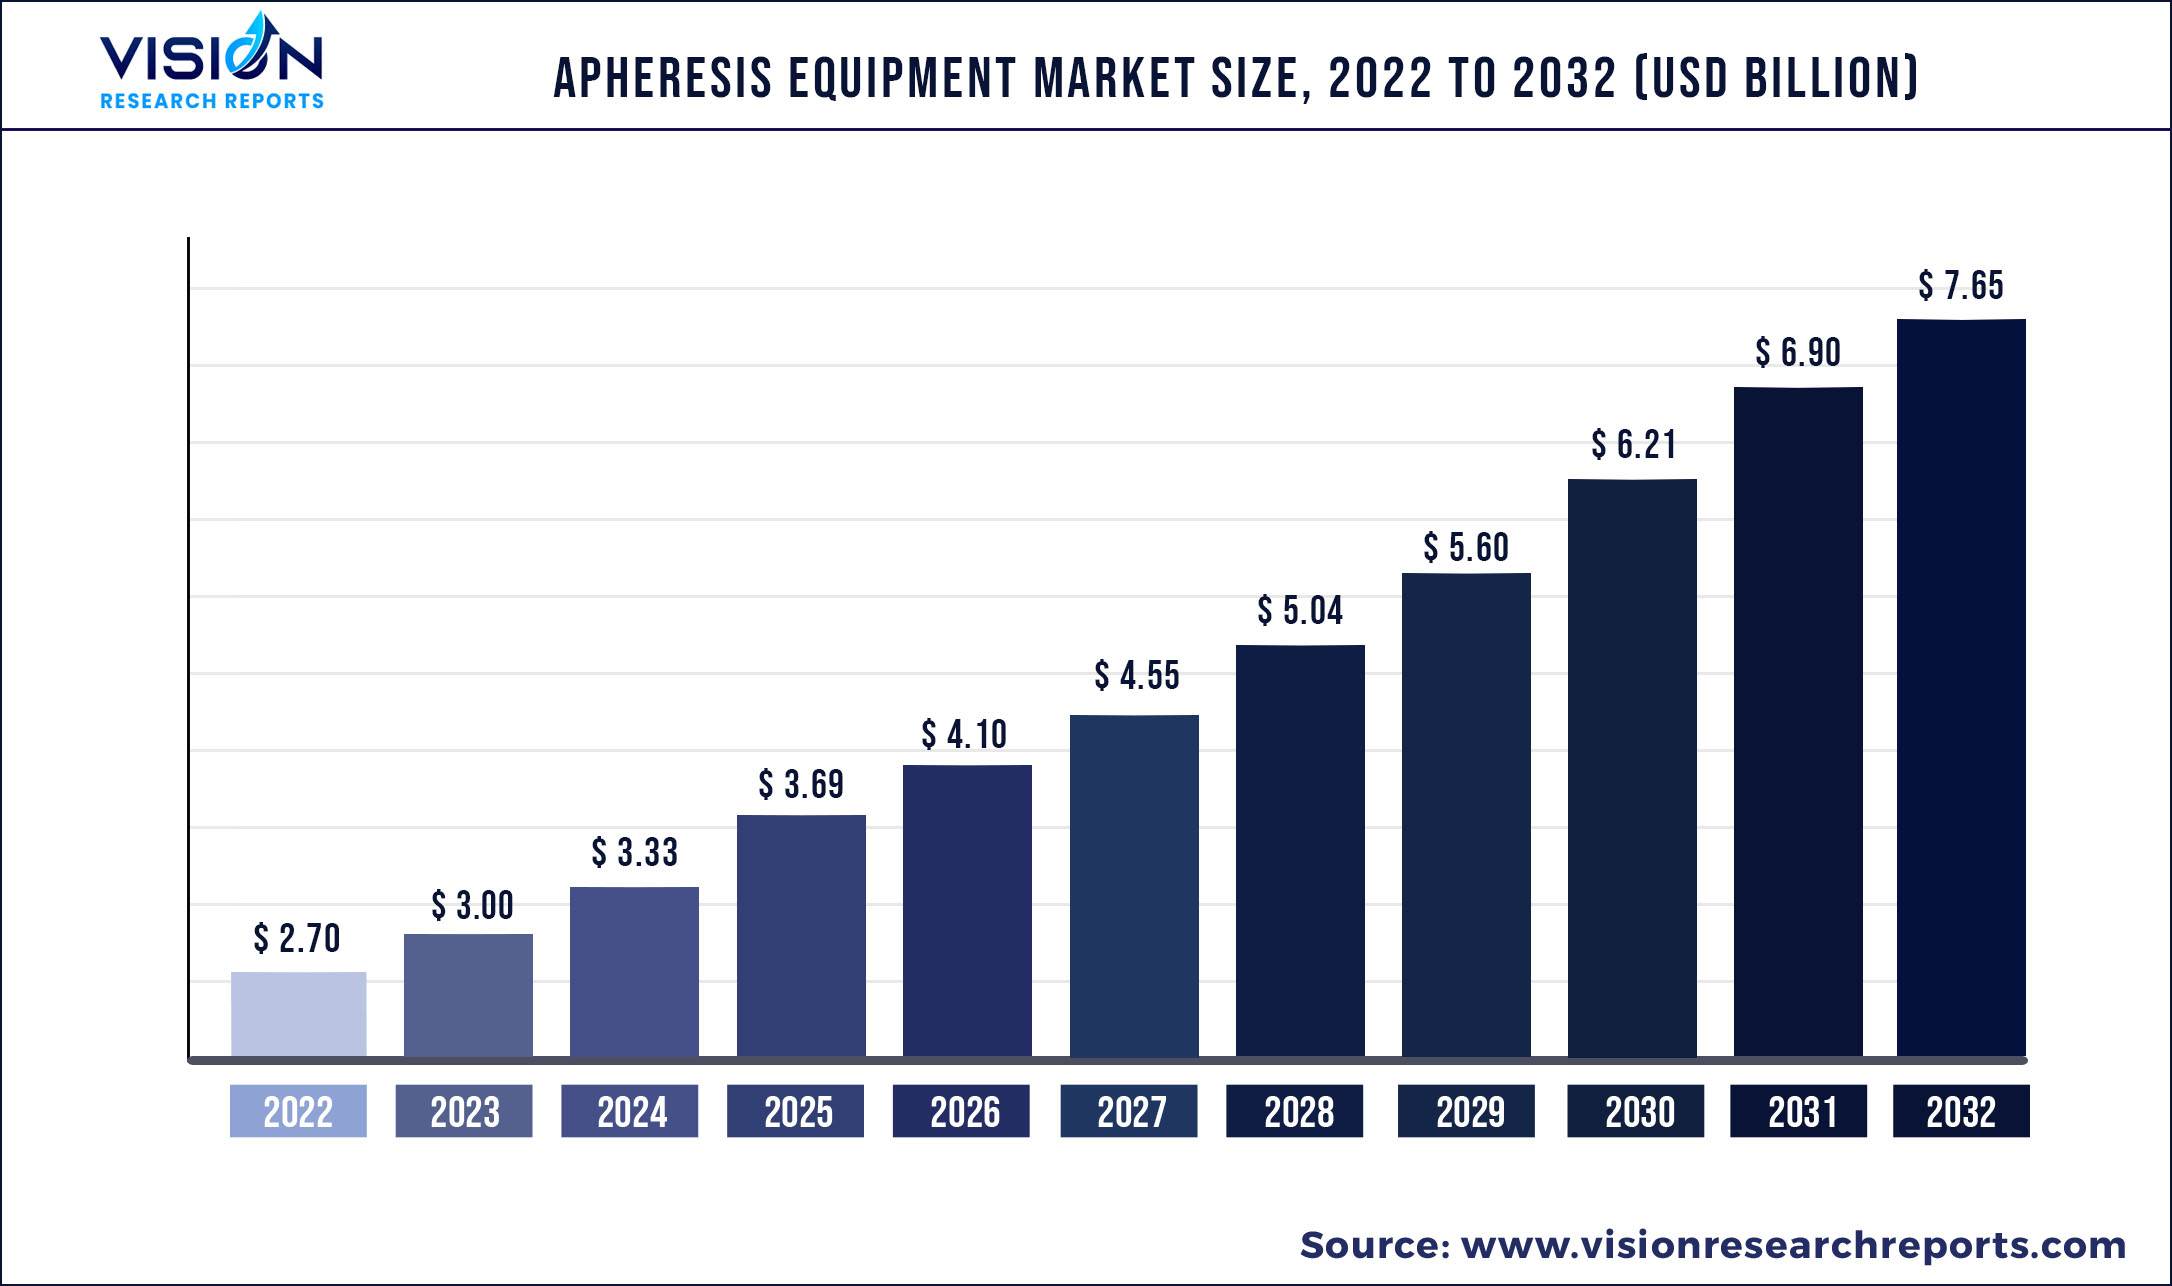 Apheresis Equipment Market Size 2022 to 2032